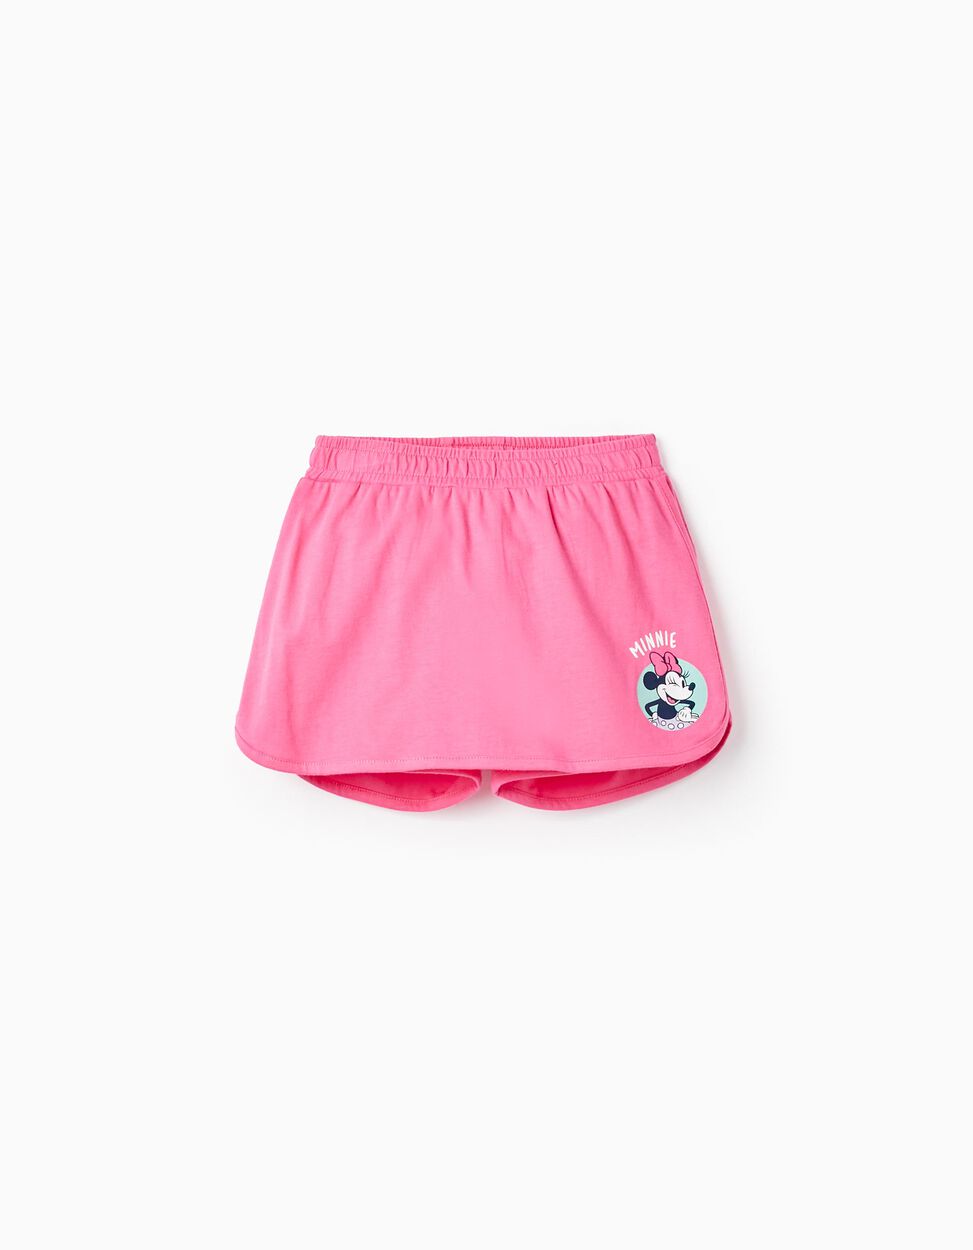 Comprar Online Falda-Pantalón de Algodón para Niña 'Minnie', Rosa